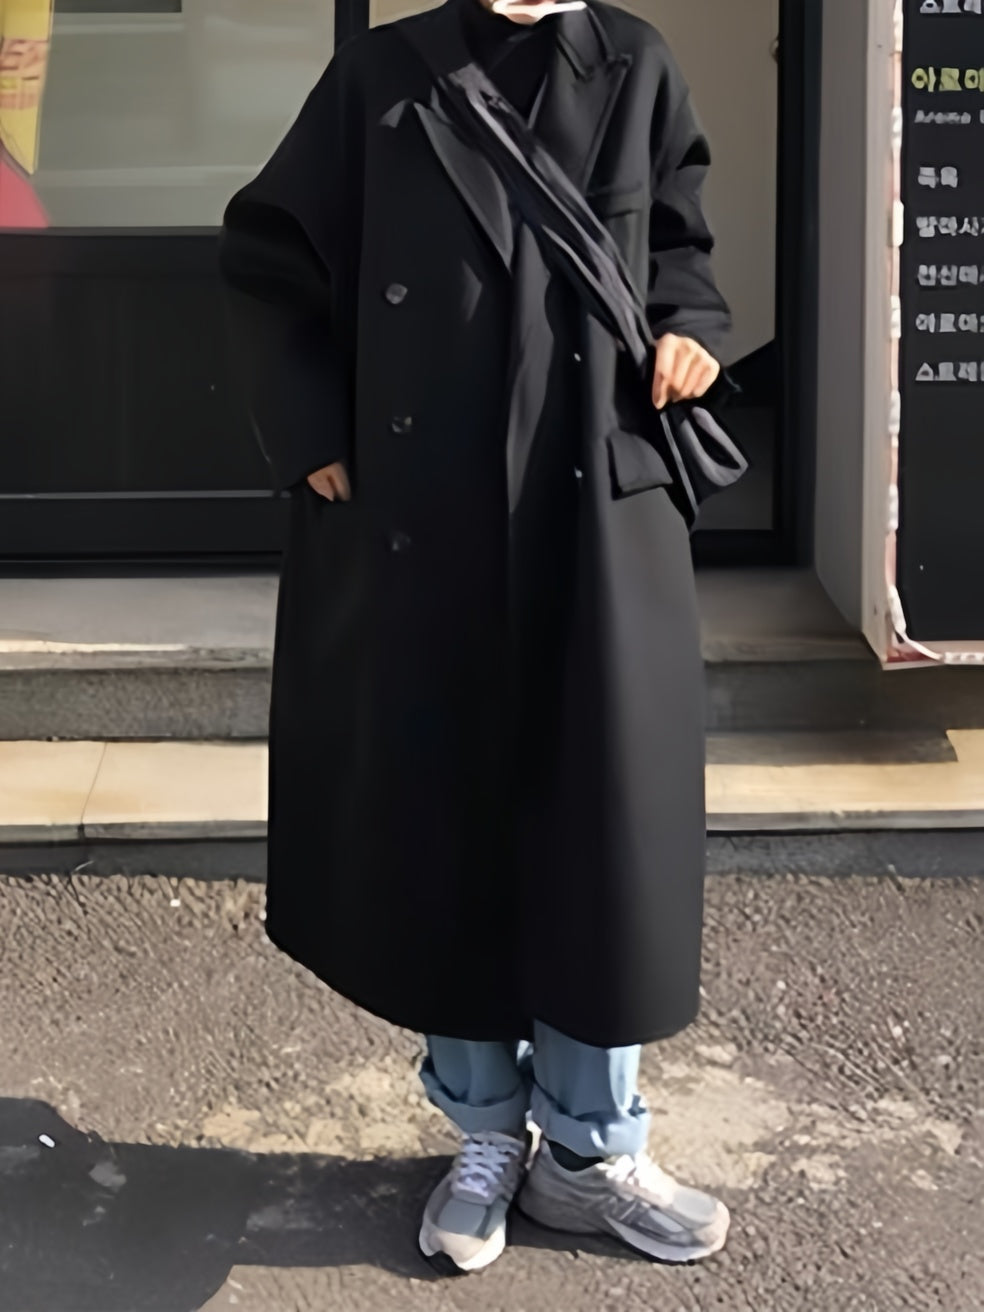 Zwarte vintage lange jas met dubbele rij knopen